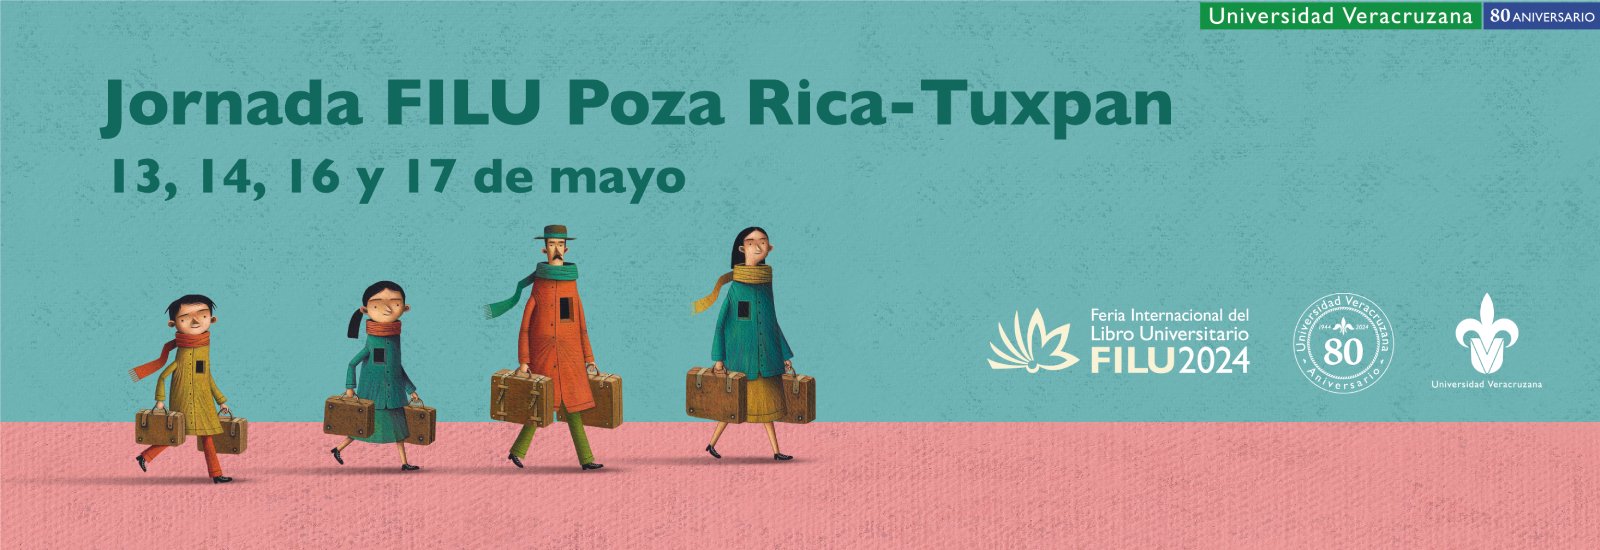 Jornada FILU Poza Rica-Tuxpan13, 14, 16 y 17 de mayo